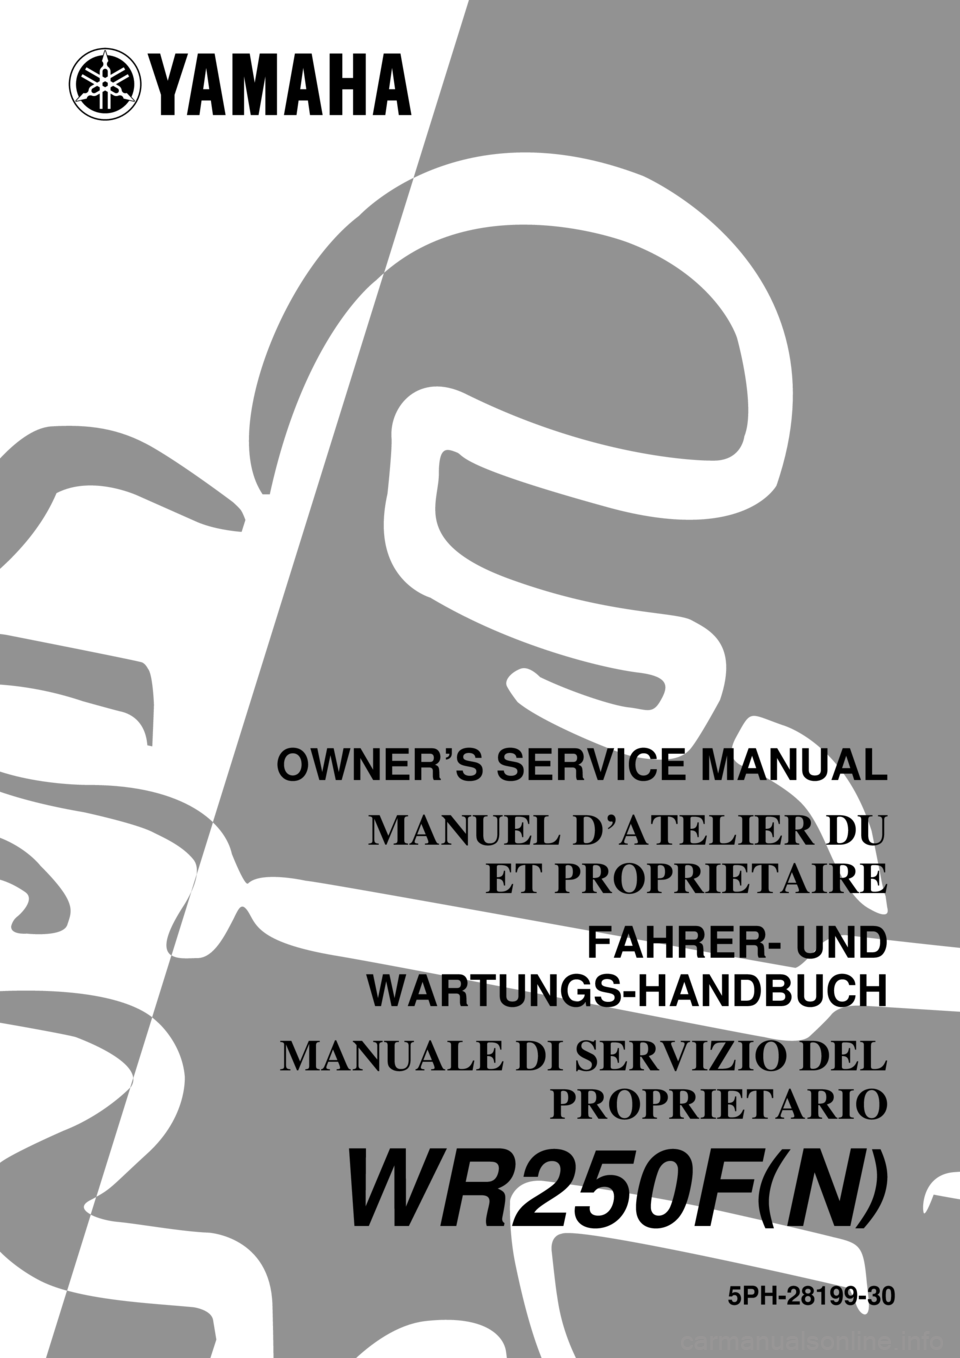 YAMAHA WR 250F 2001  Betriebsanleitungen (in German) 5PH-28199-30
WR250F(N)
OWNER’S SERVICE MANUAL
MANUEL D’ATELIER DU
ET PROPRIETAIRE
FAHRER- UND
WARTUNGS-HANDBUCH
MANUALE DI SERVIZIO DEL
PROPRIETARIO 